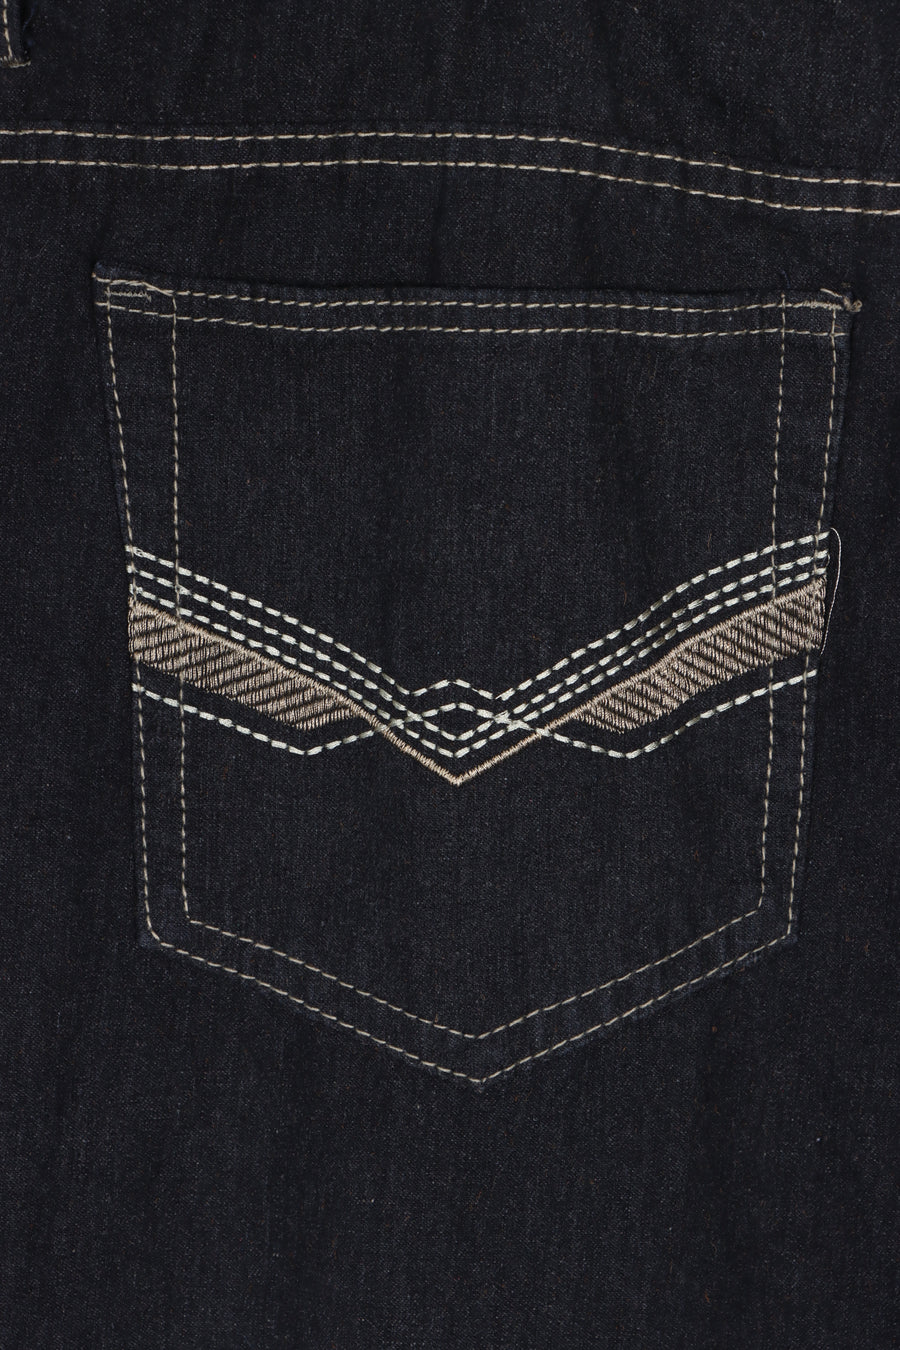 POLITIX Embroidered Black Denim Jorts Shorts (46)